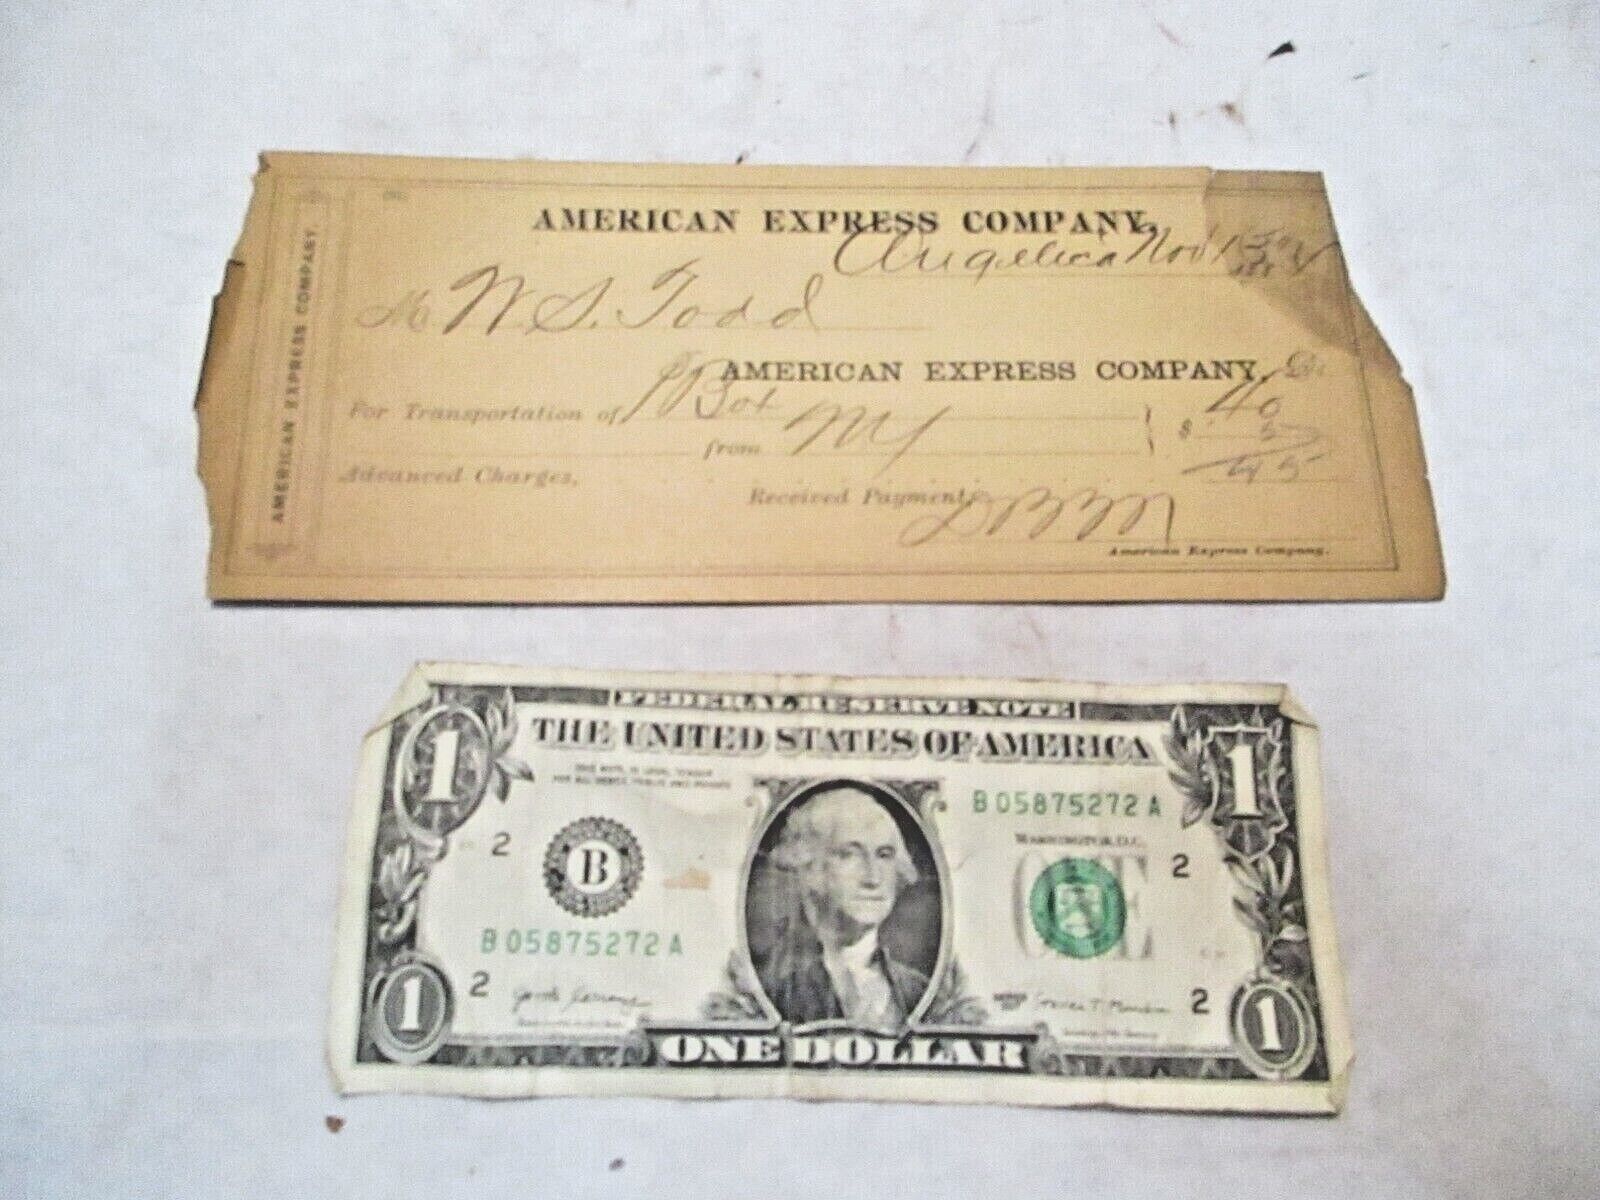 Nov. 13, 1884 American Express Company Draft Check 